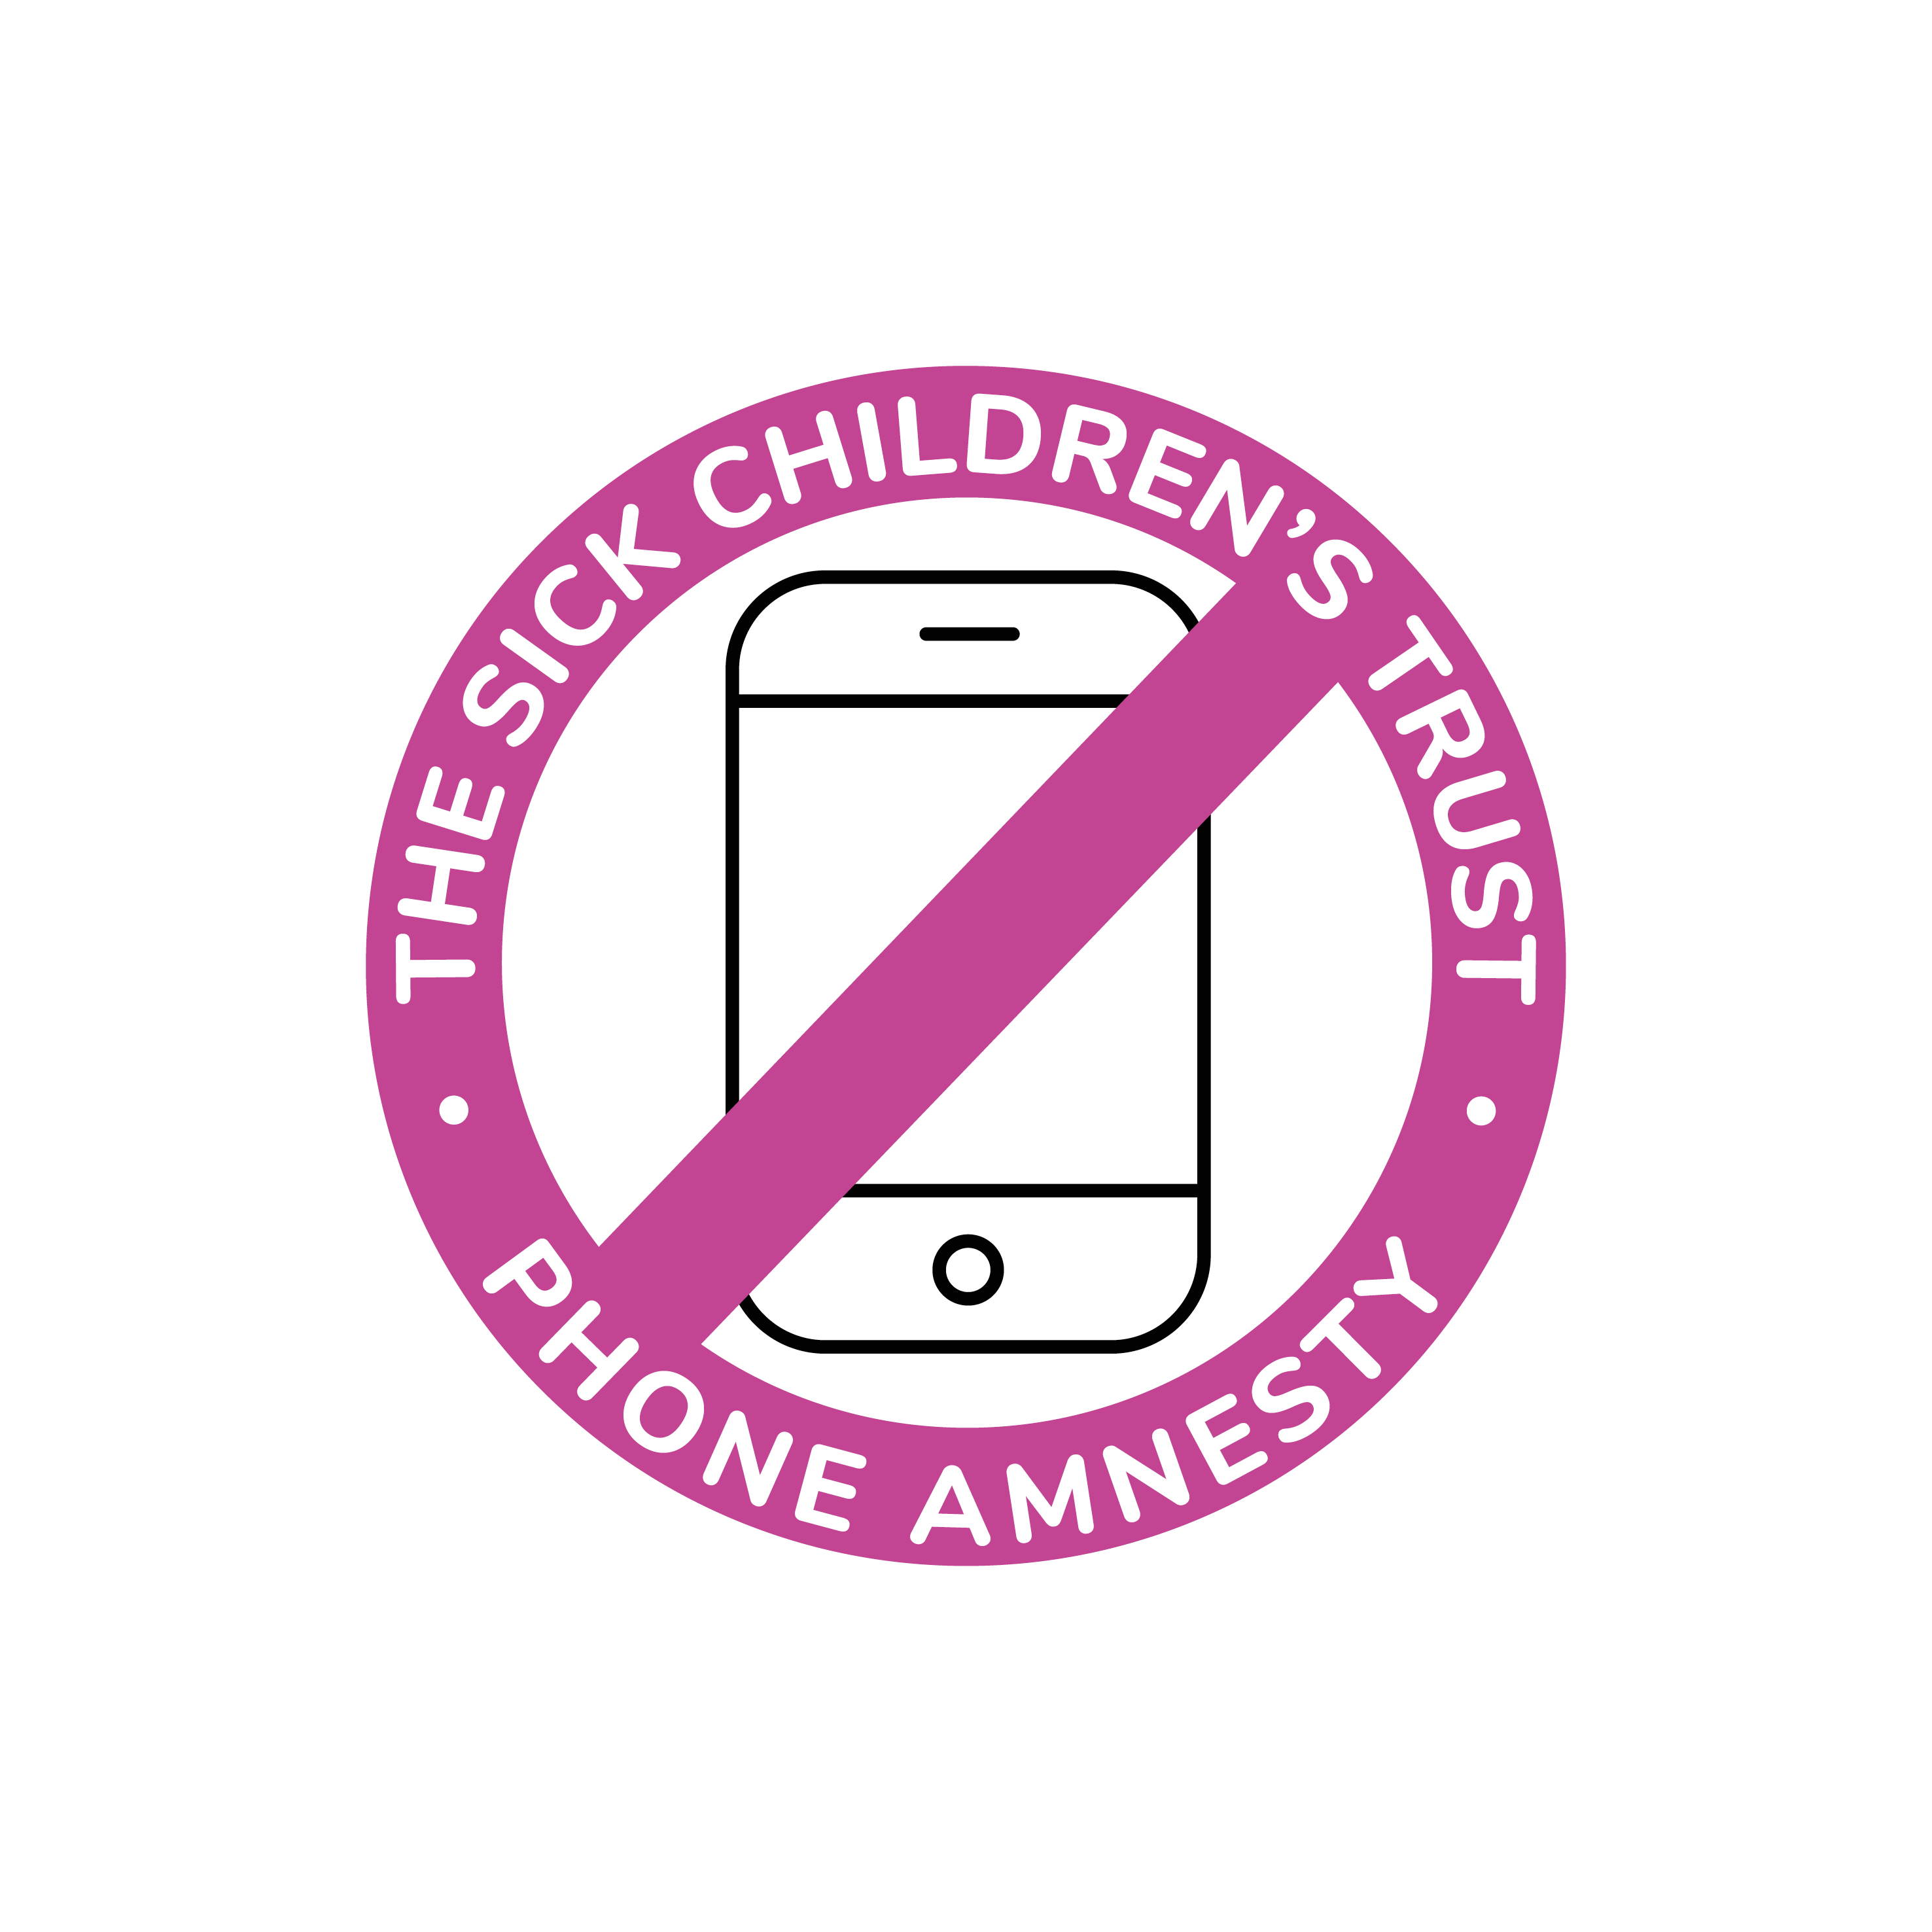 Phone Amnesty